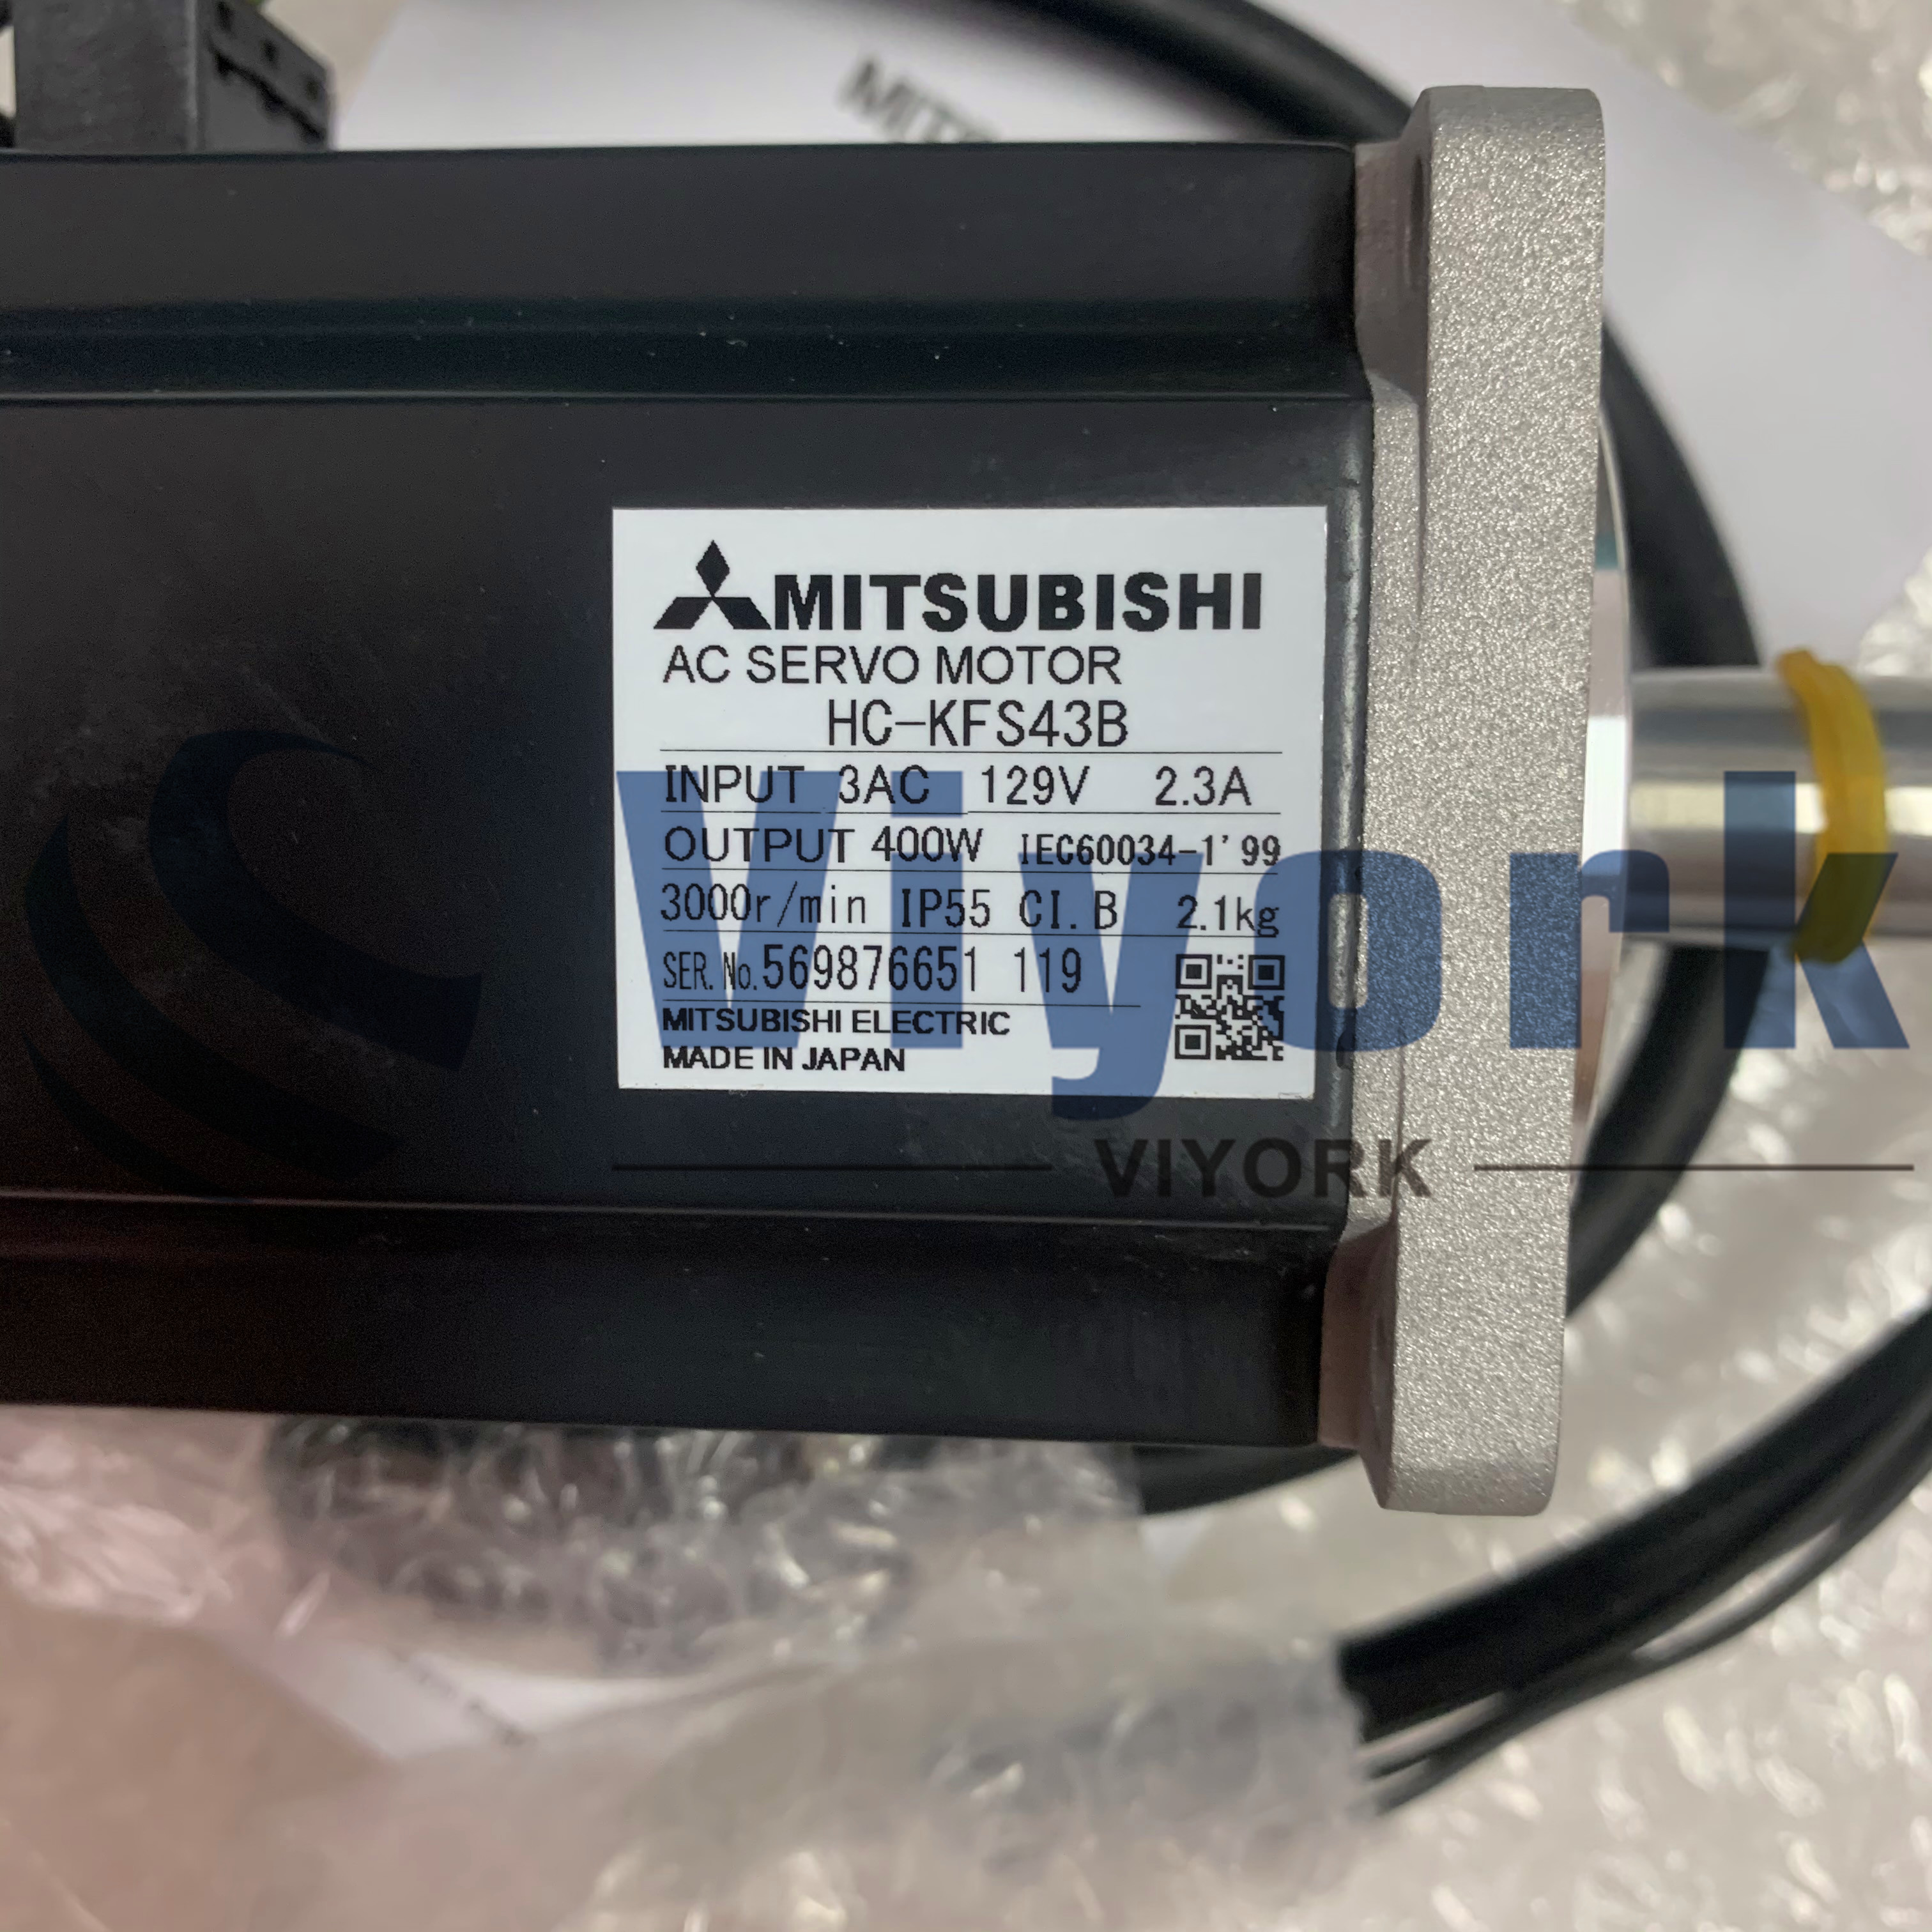 Mitsubishi HC-KFS43B AC SERVO MOTOR 2.3 AMP 3-PHASE 129 VAC 3000 RPM NEW